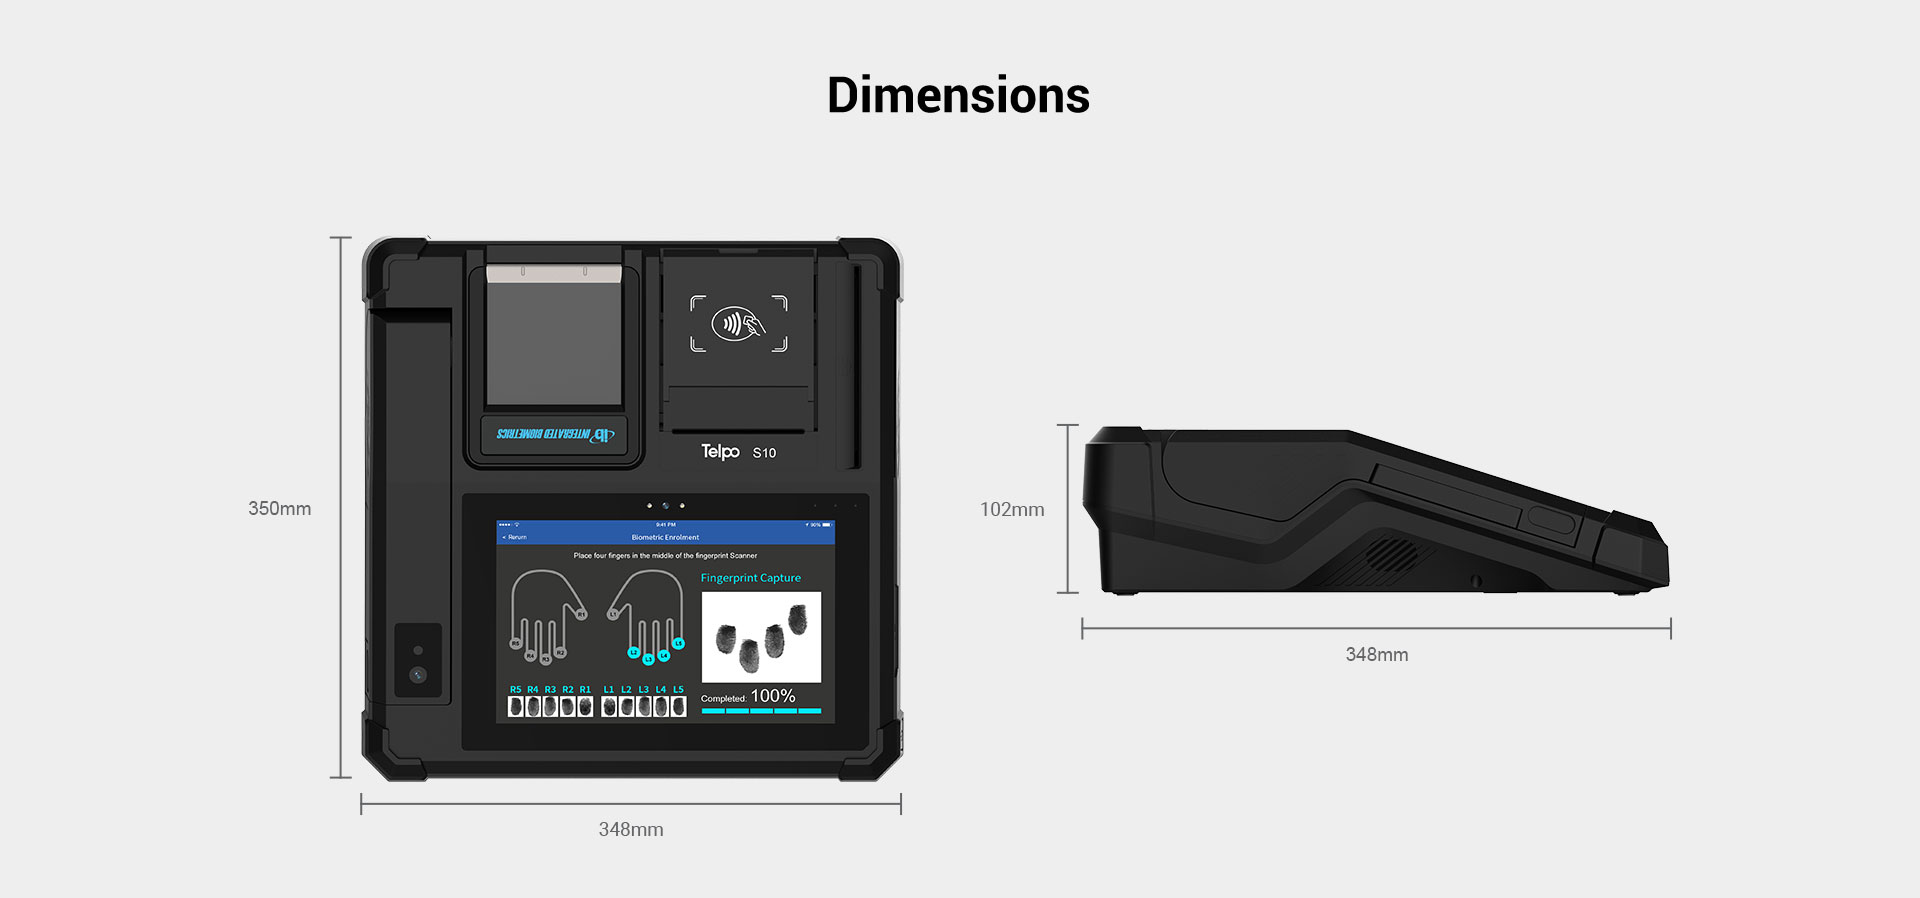 Dimensions of NIN enrolment device Telpo S10